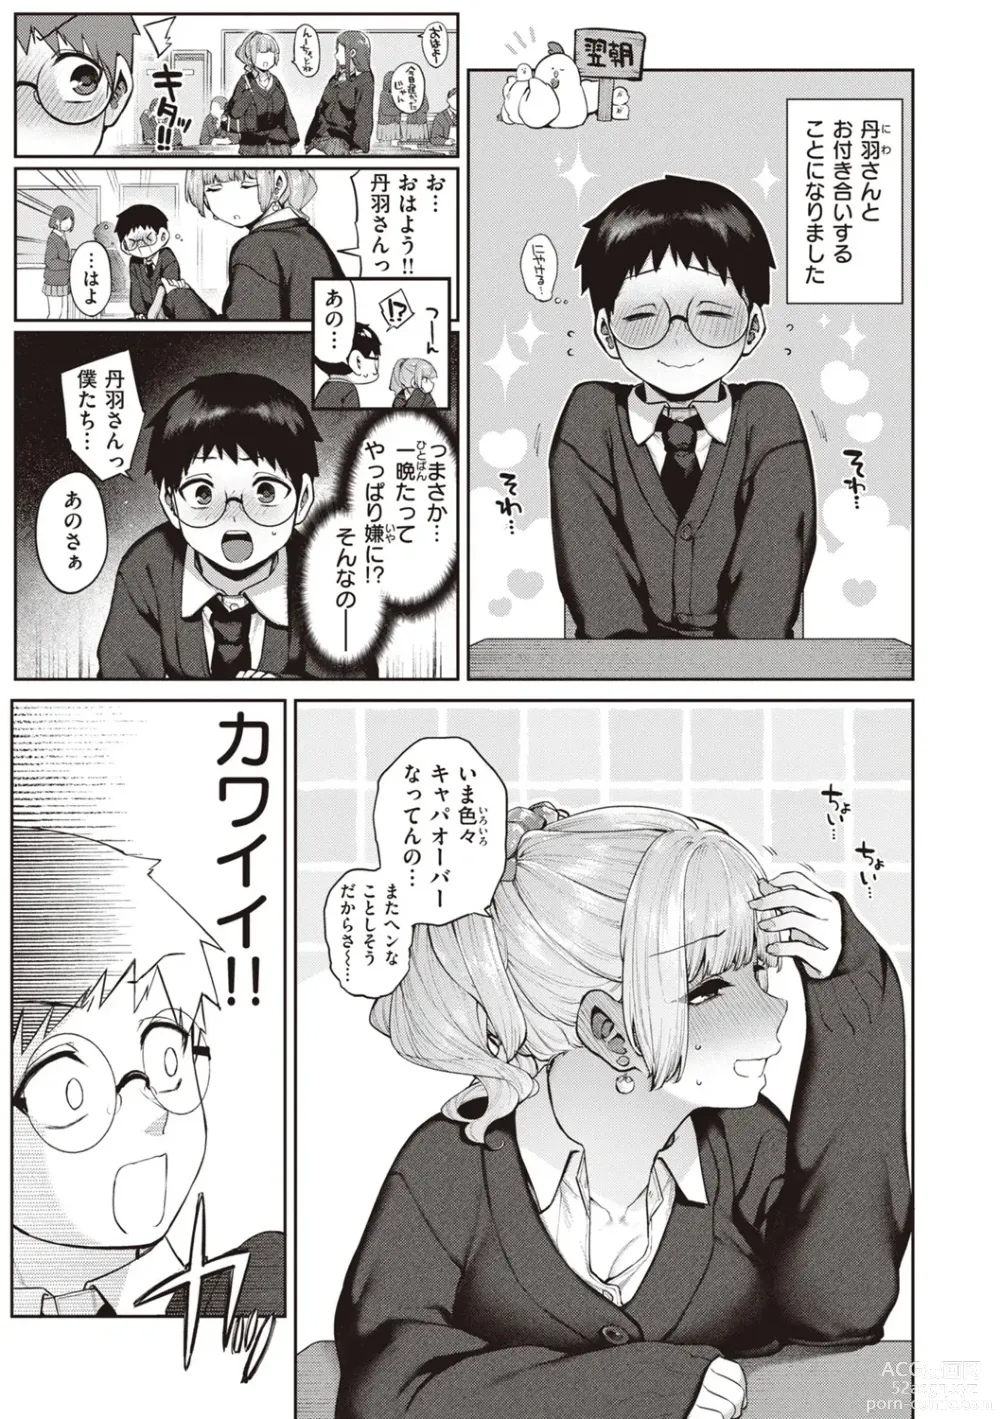 Page 27 of manga DA-DA-MO-RE